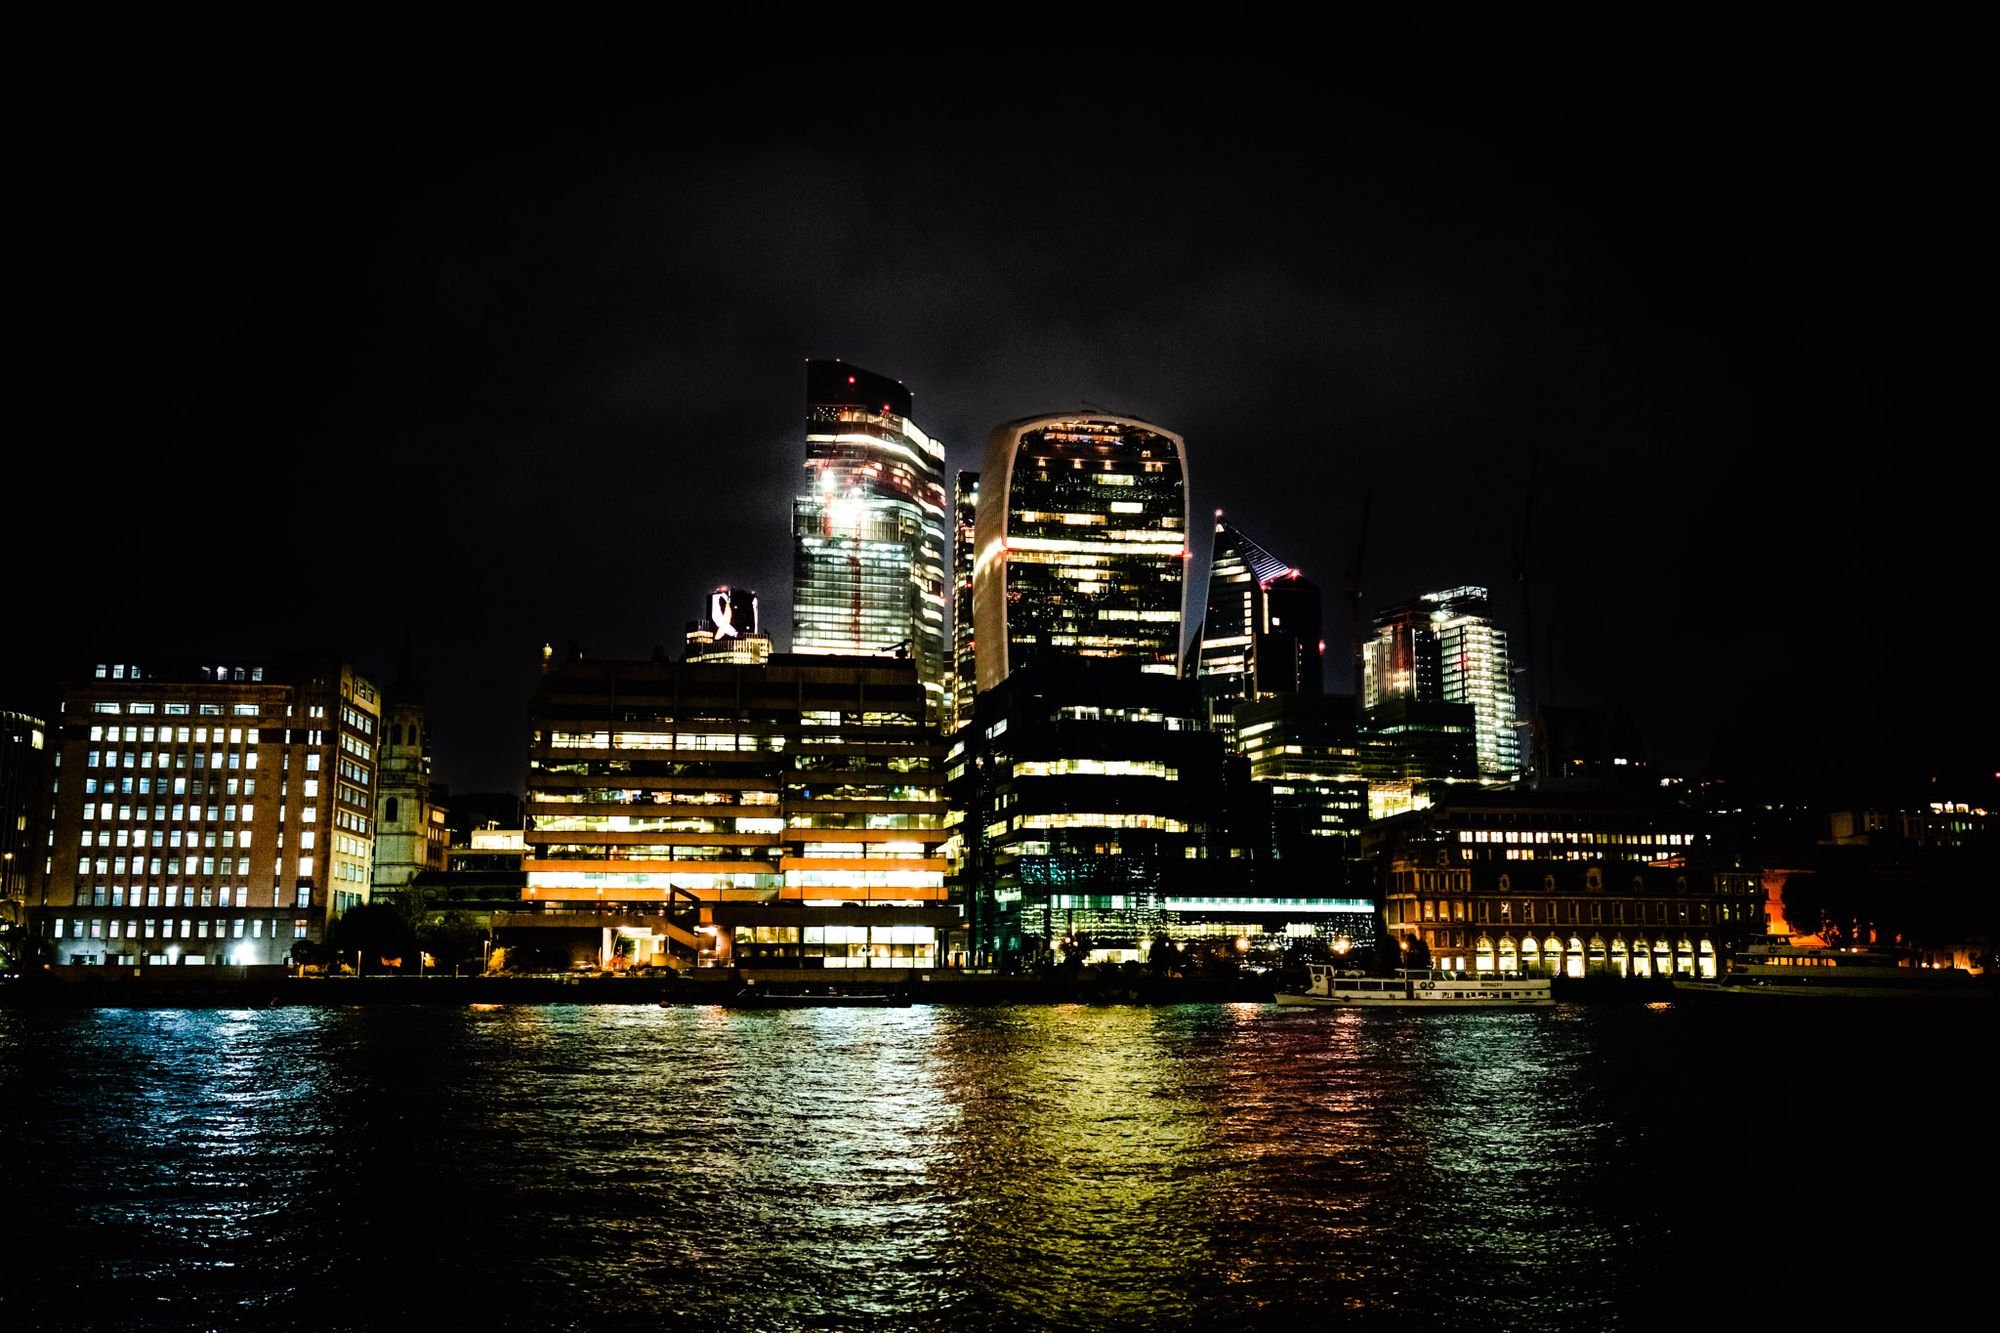 London waterfront at night